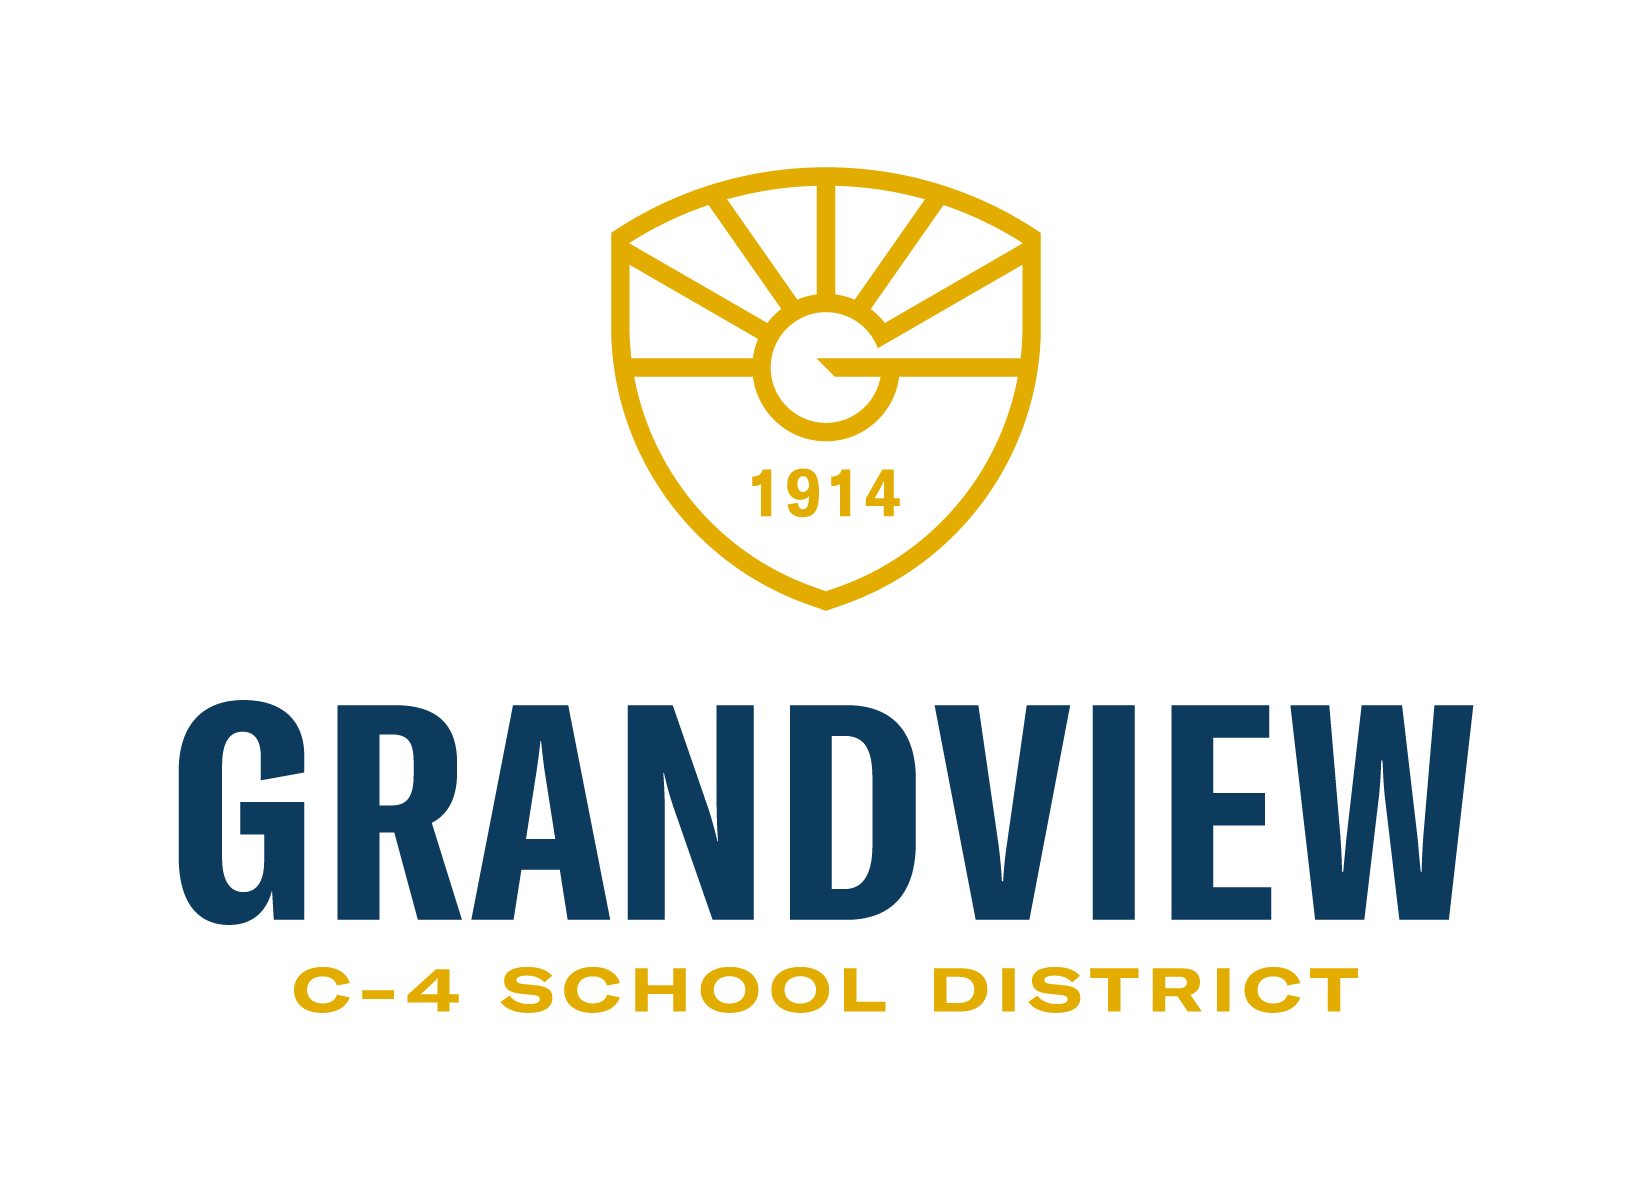 Grandview School District Logo